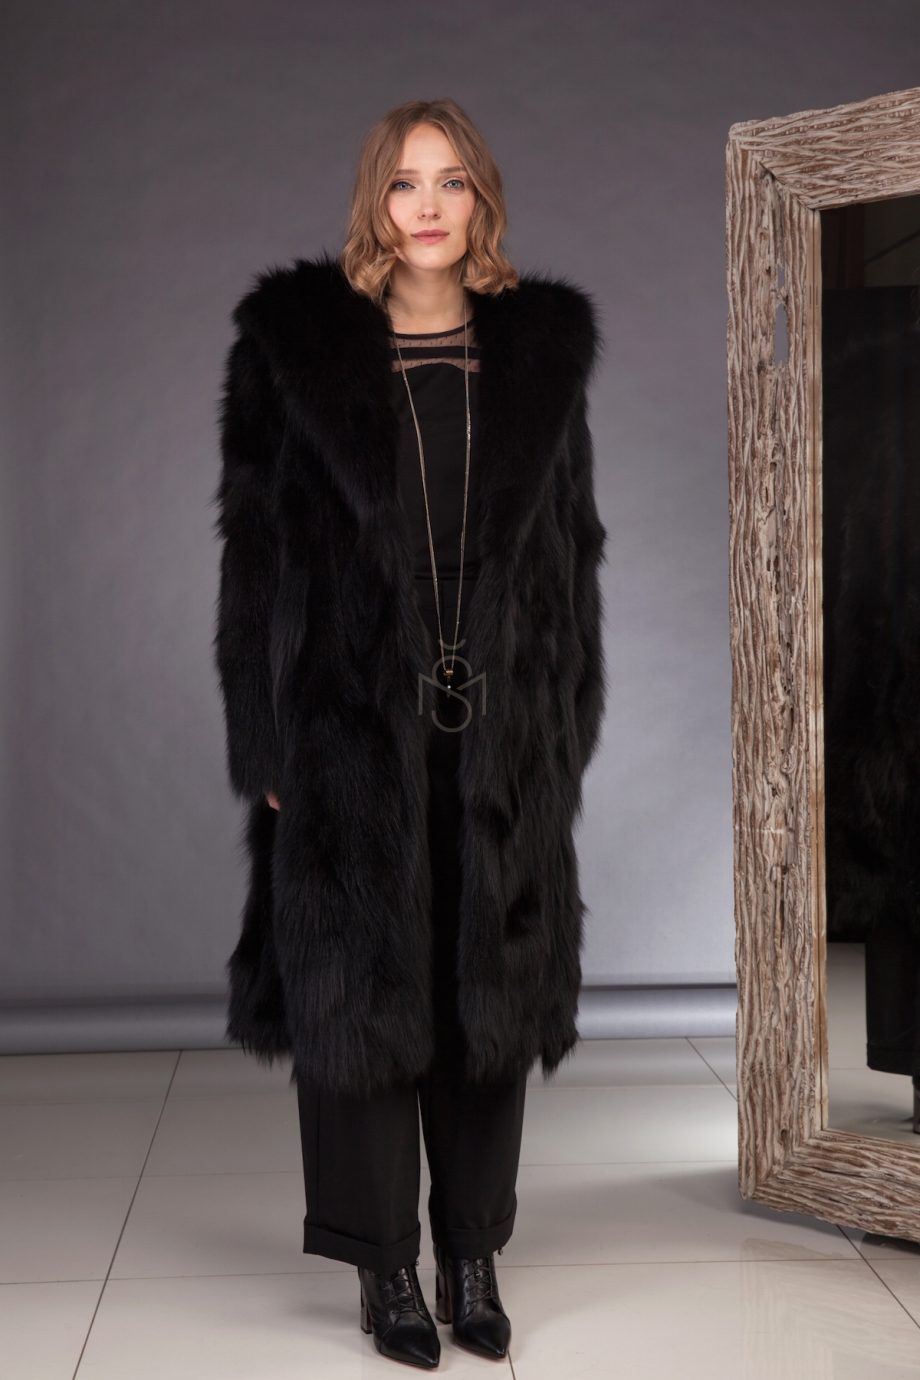 Fox fur coat black made by SILTA MADA fur studio in Vilnius